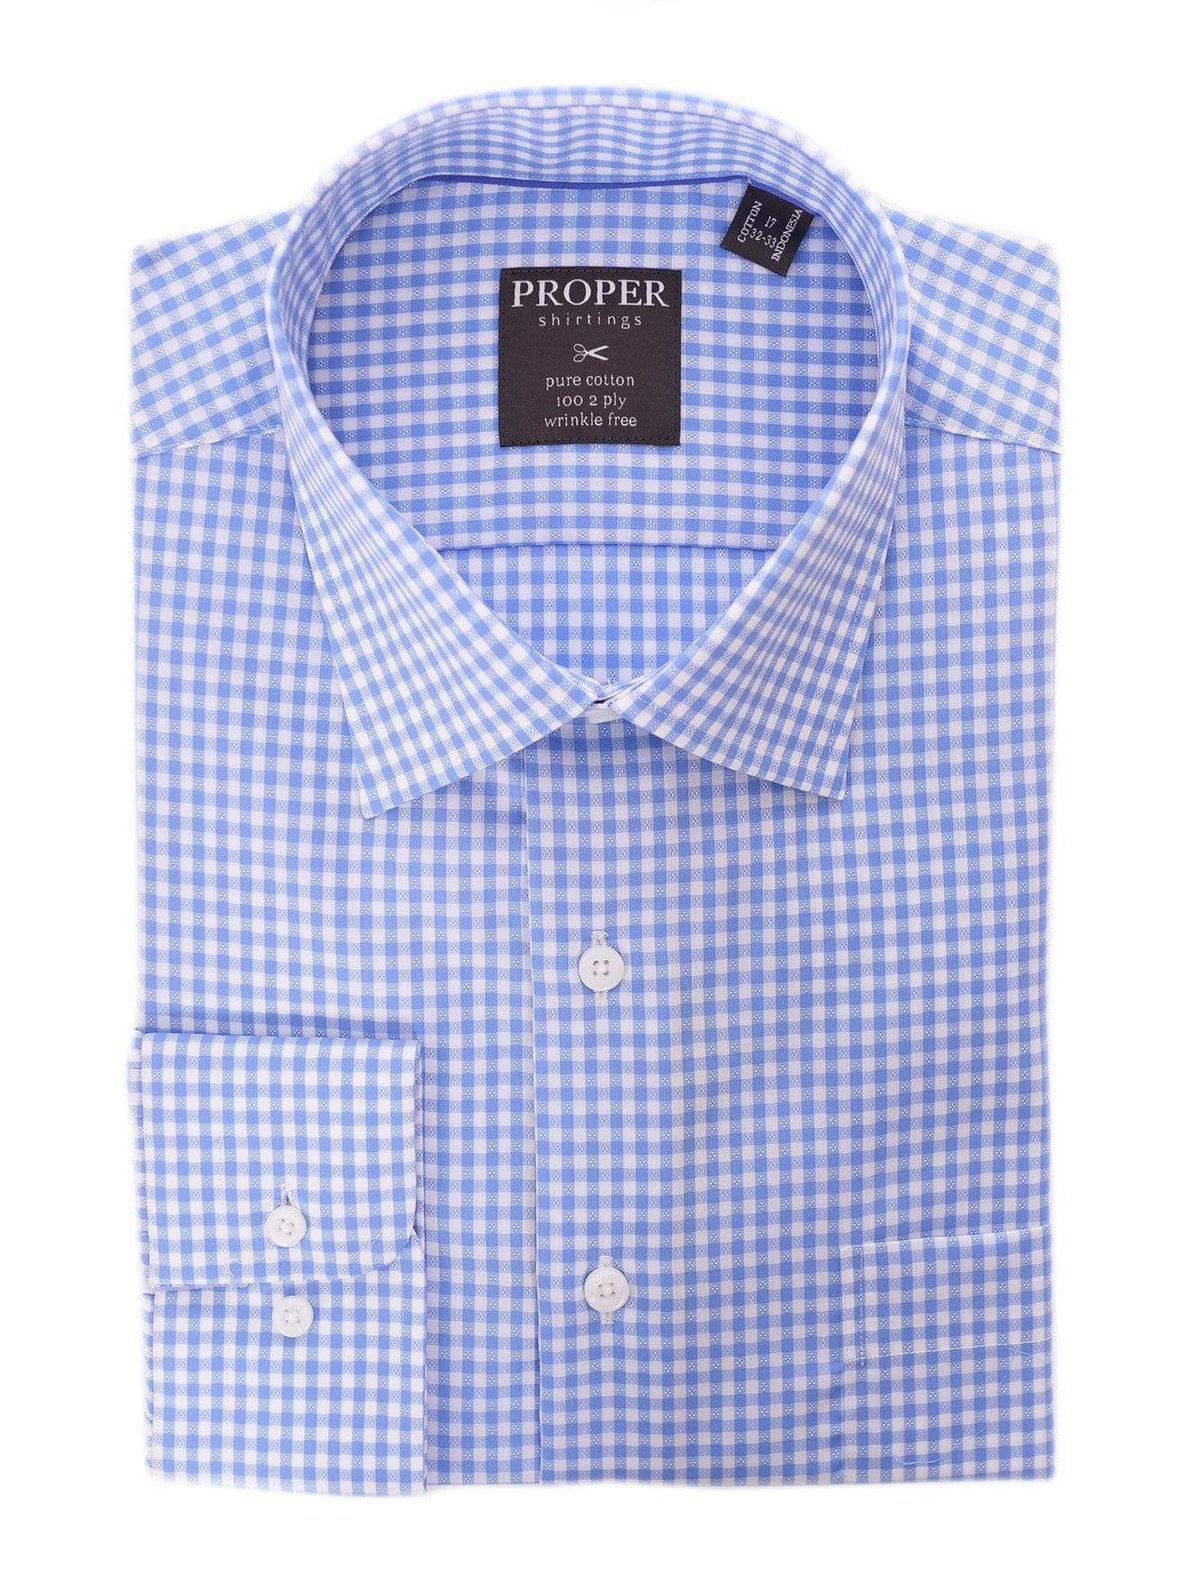 Proper Shirtings SHIRTS 17 32/33 Mens Blue &amp; White Check Spread Collar Wrinkle Free 100 2 Ply Cotton Dress Shirt